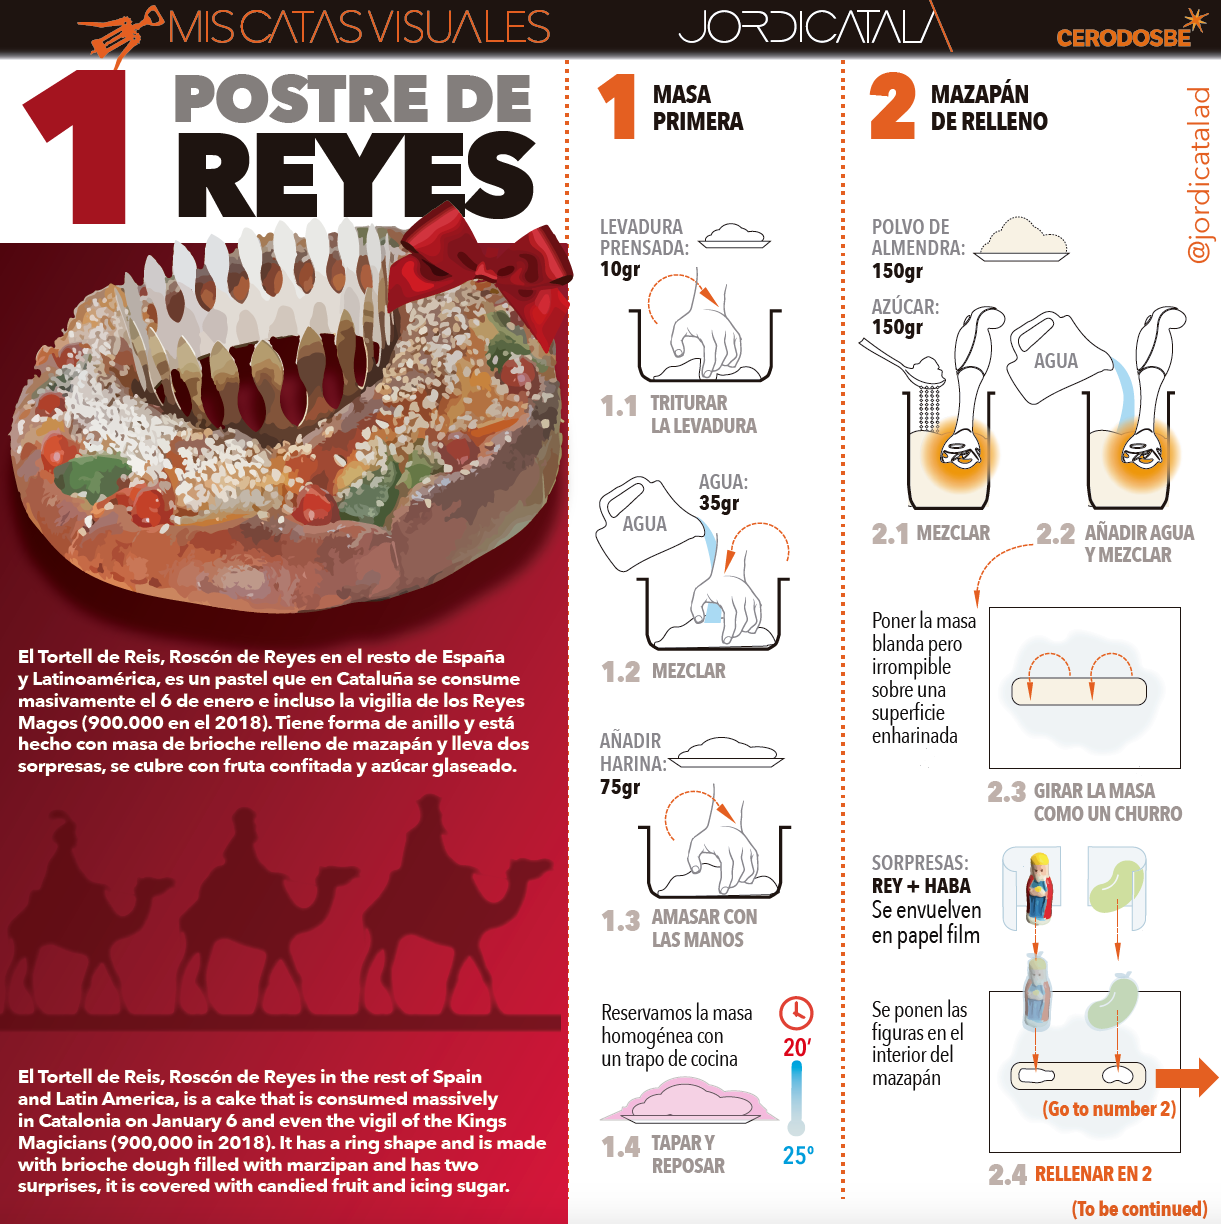 Info 1: Postre de Reyes